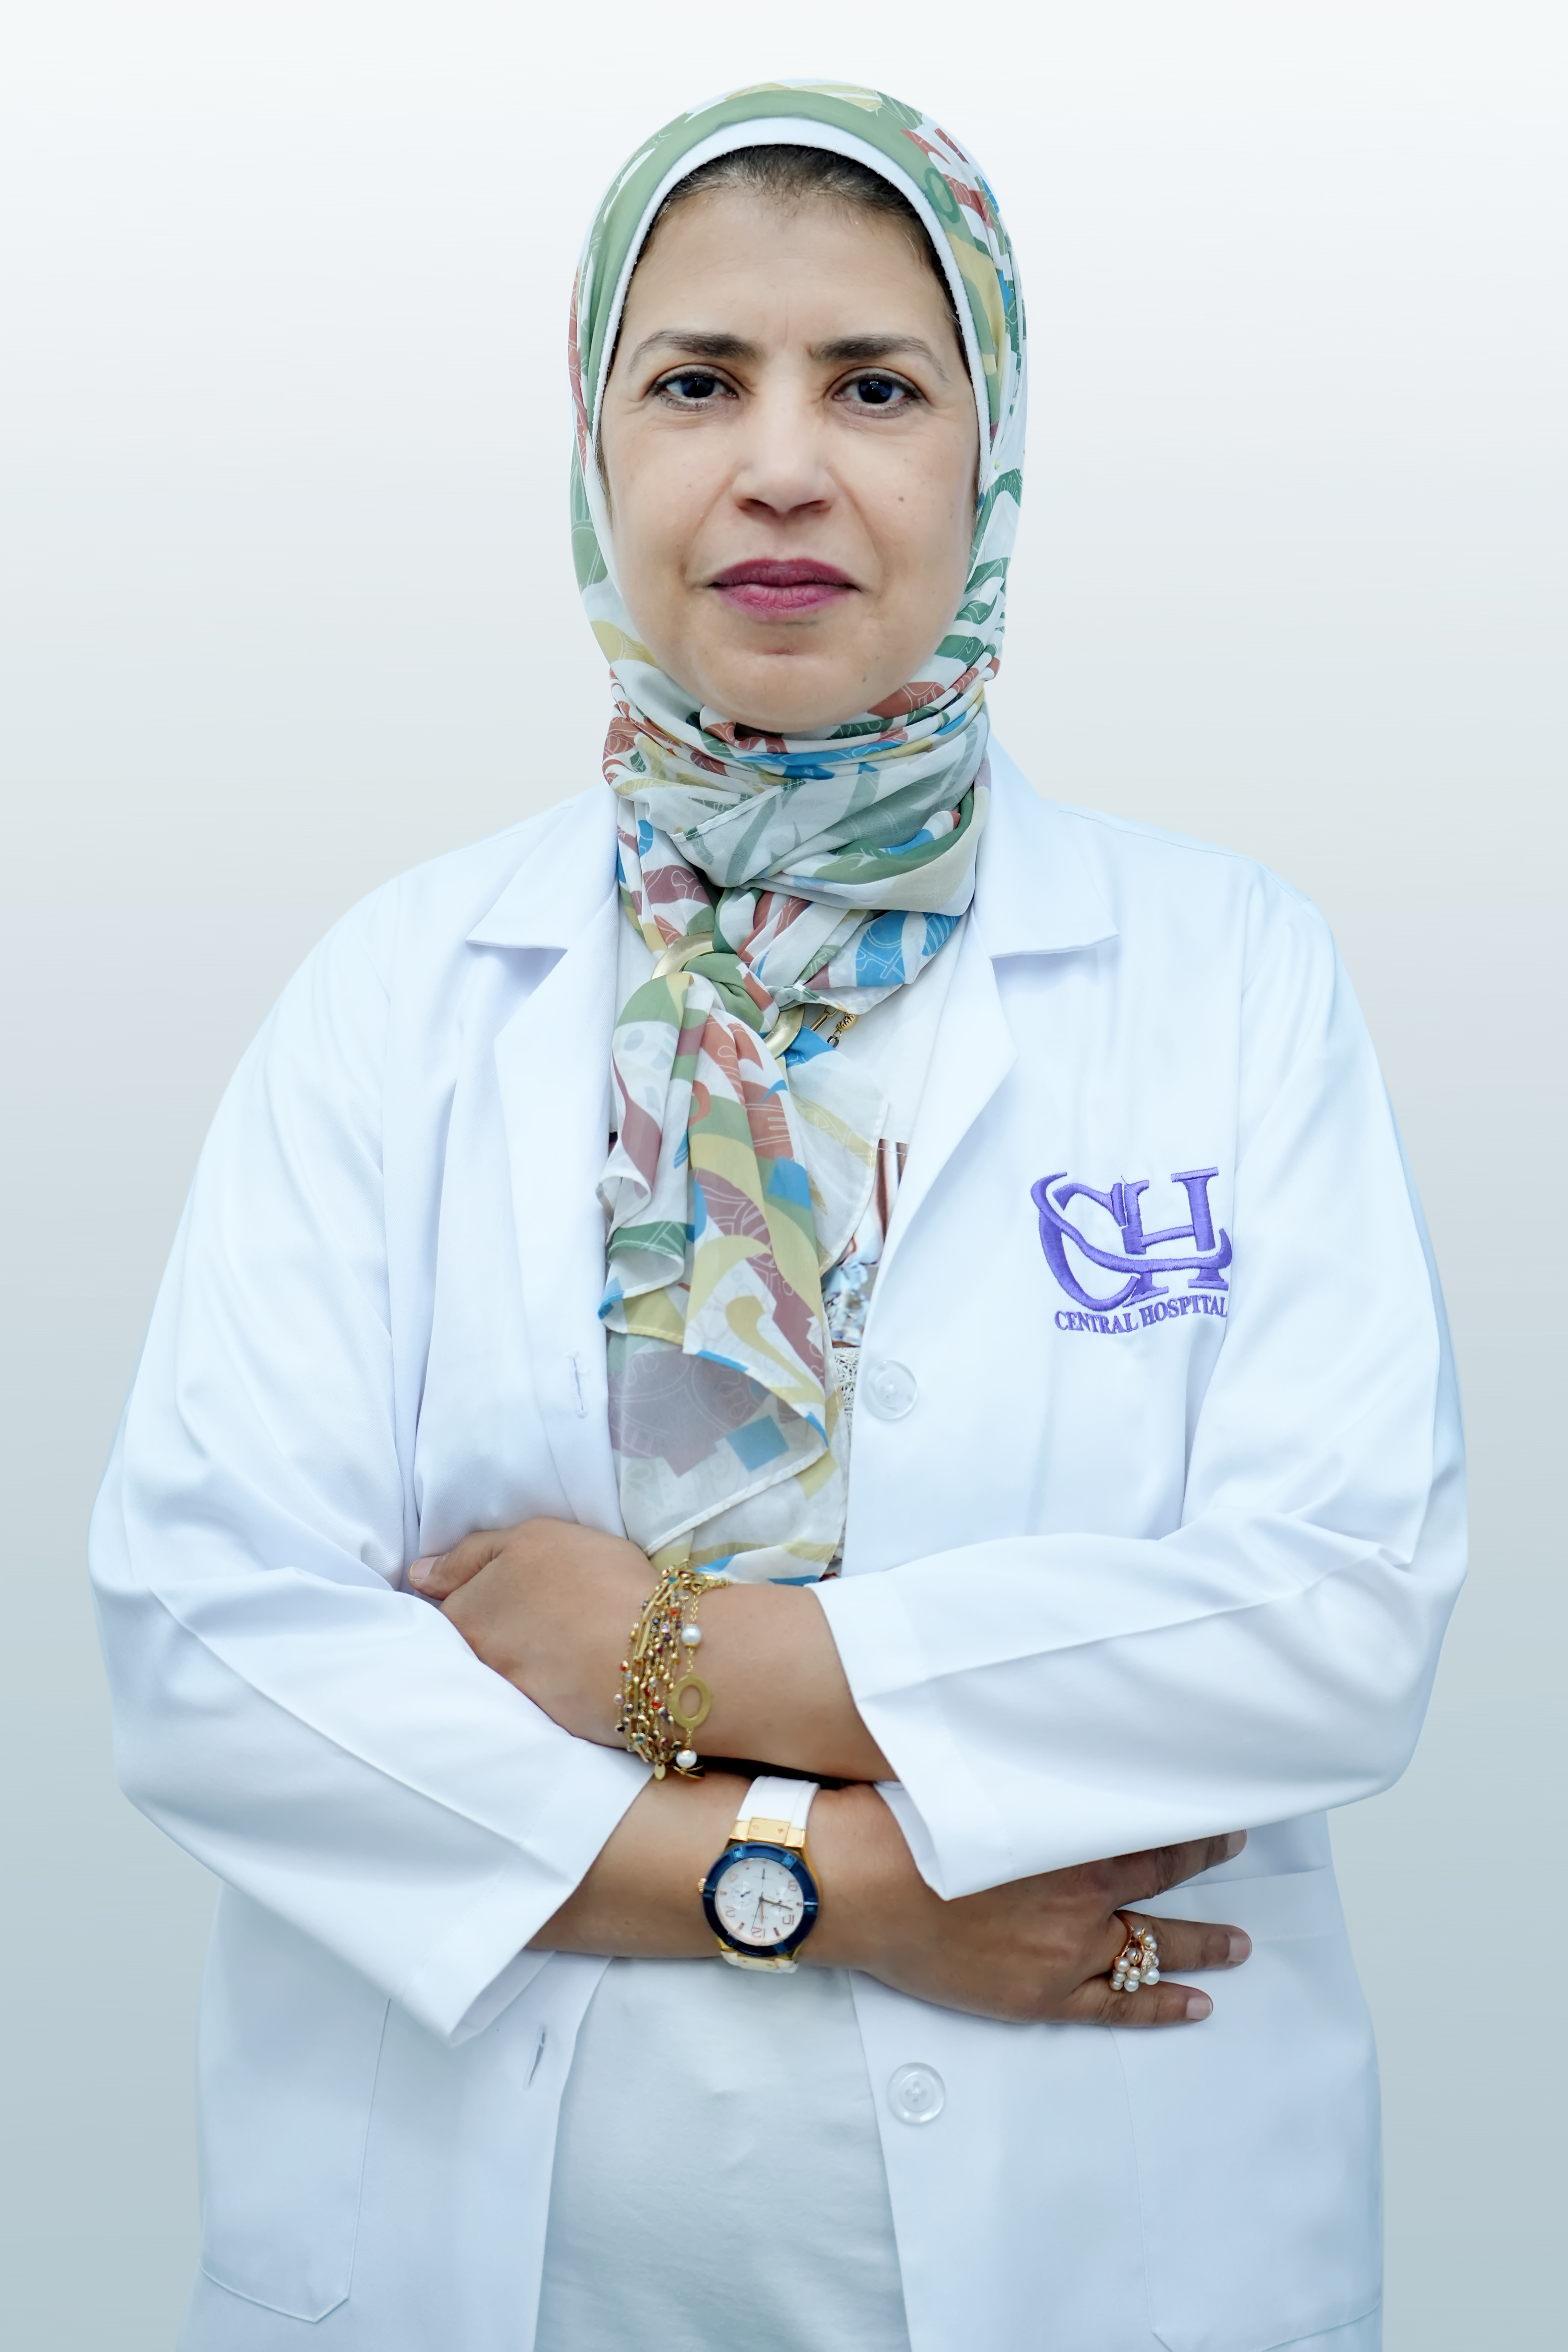 Dr. Hala Samir Badr